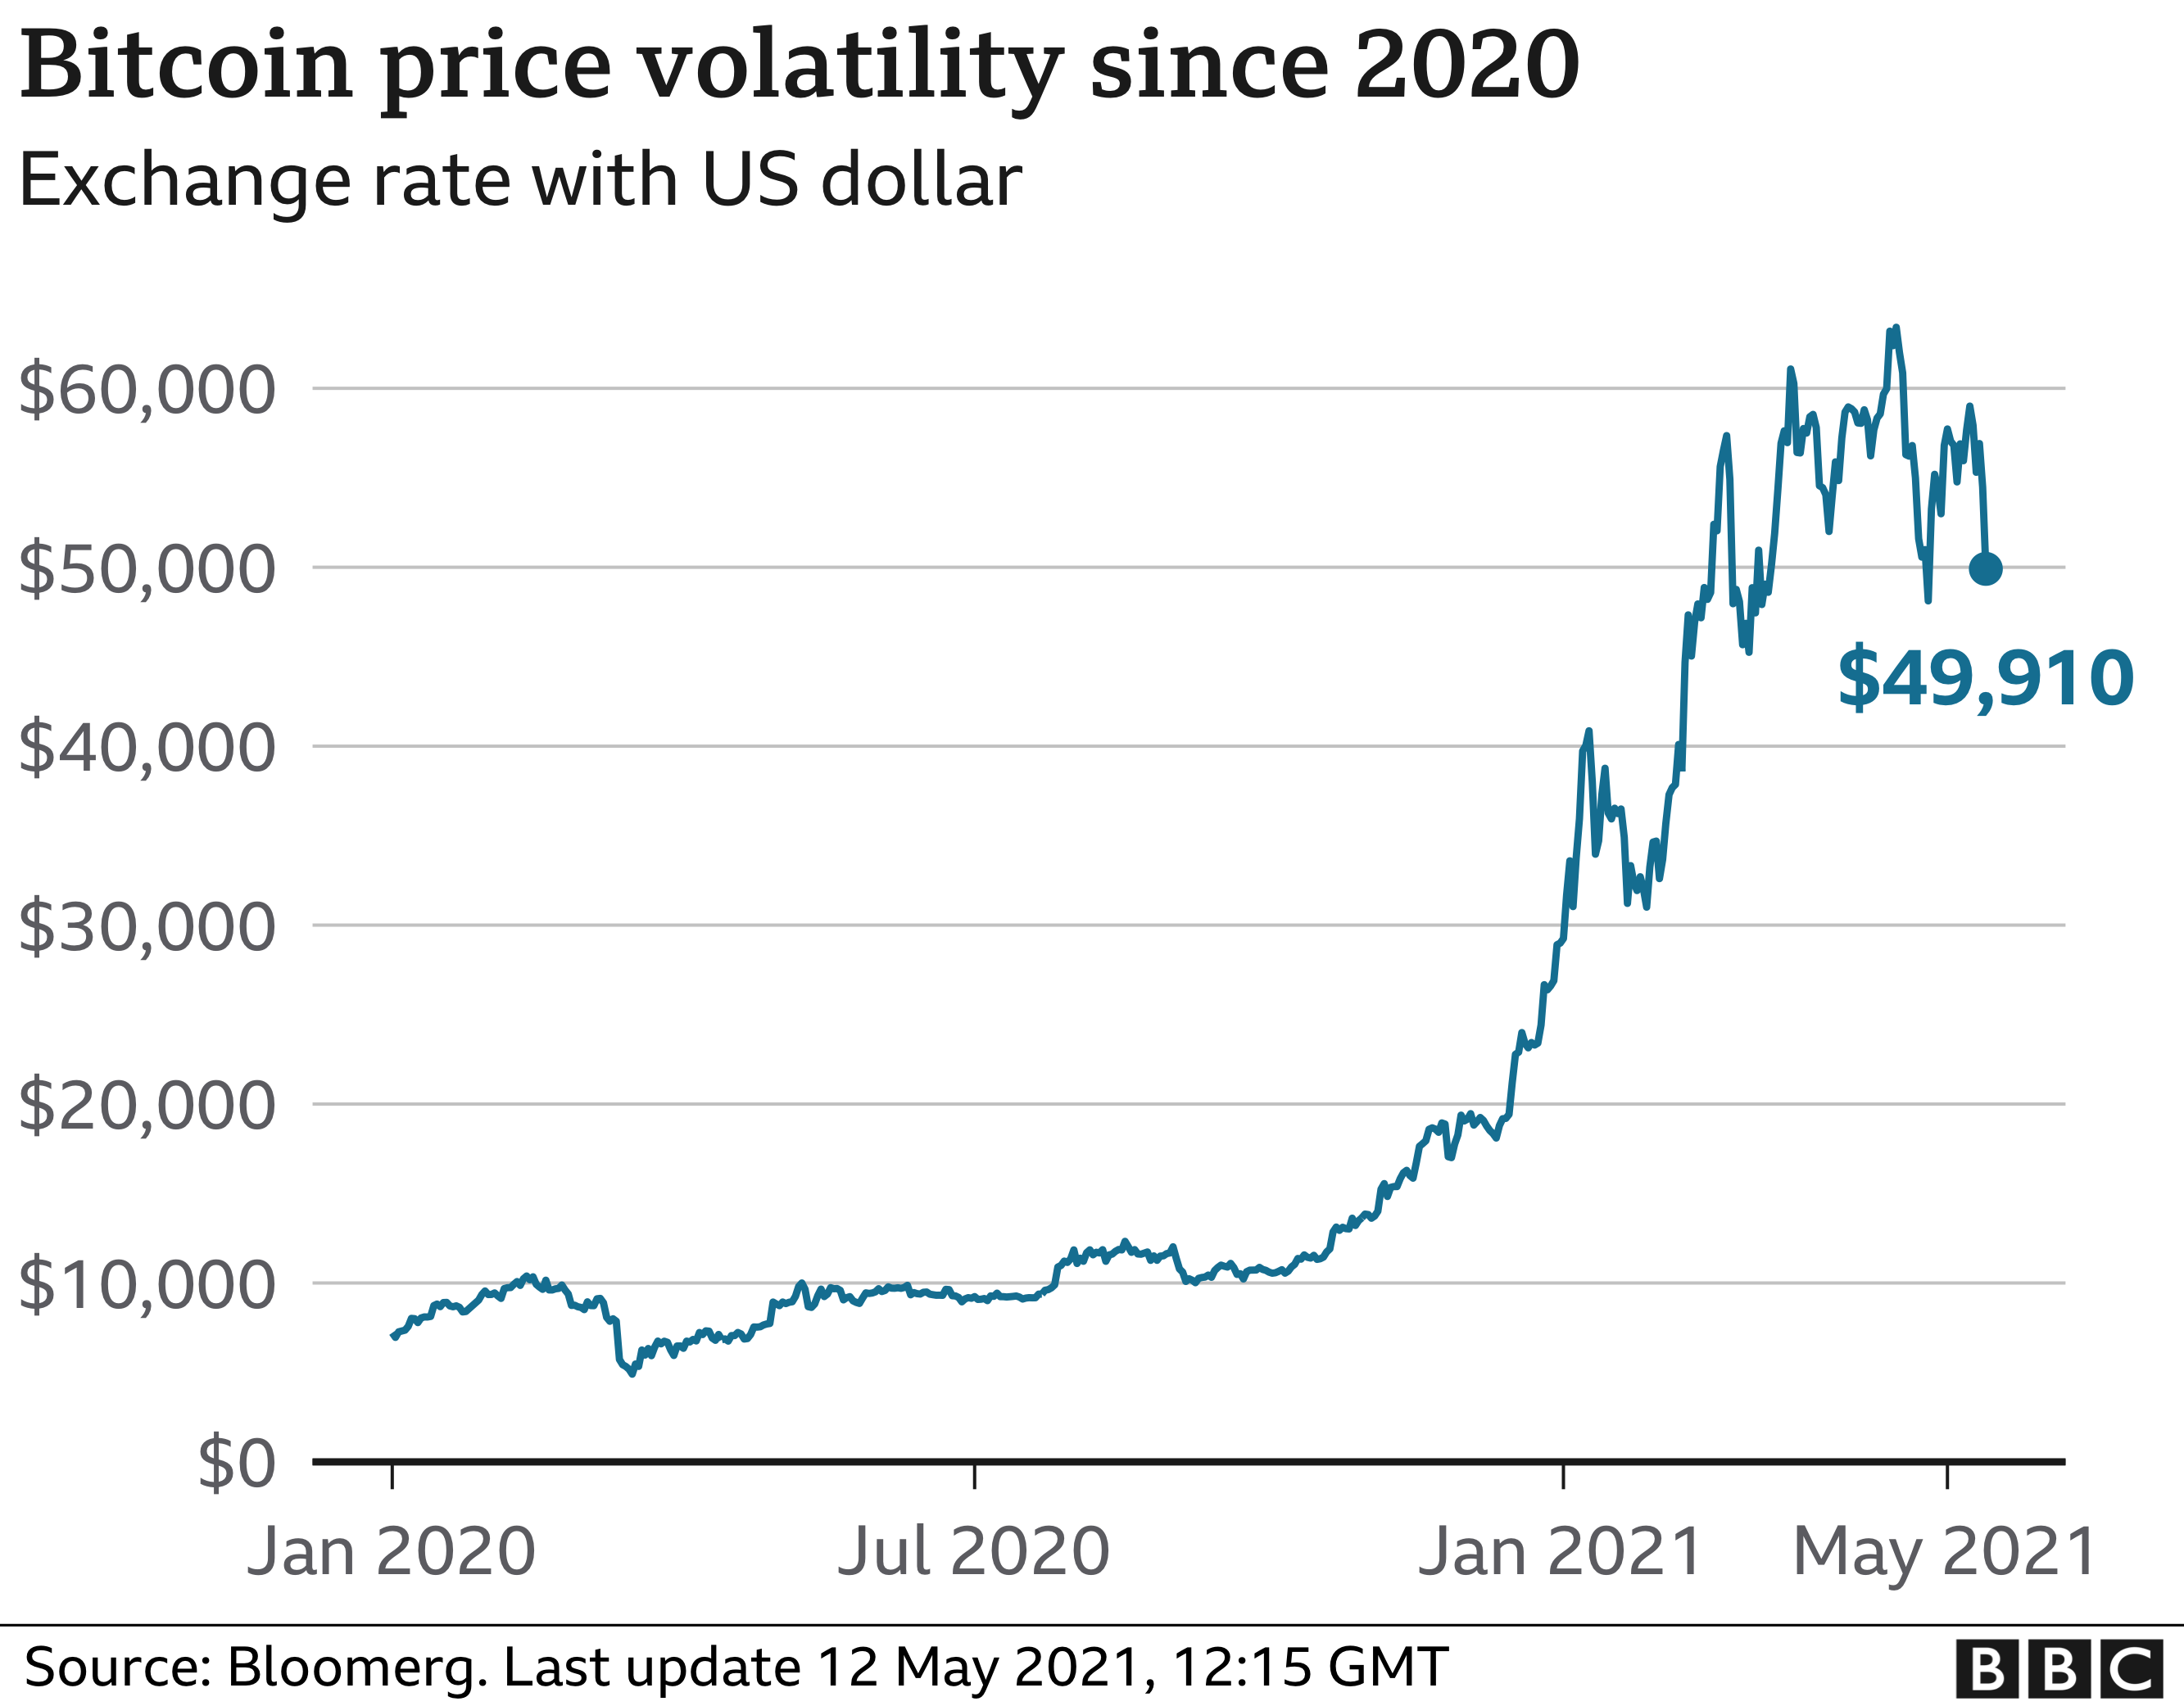 Bitcoin price volatility since 2020. Source: BBC News.